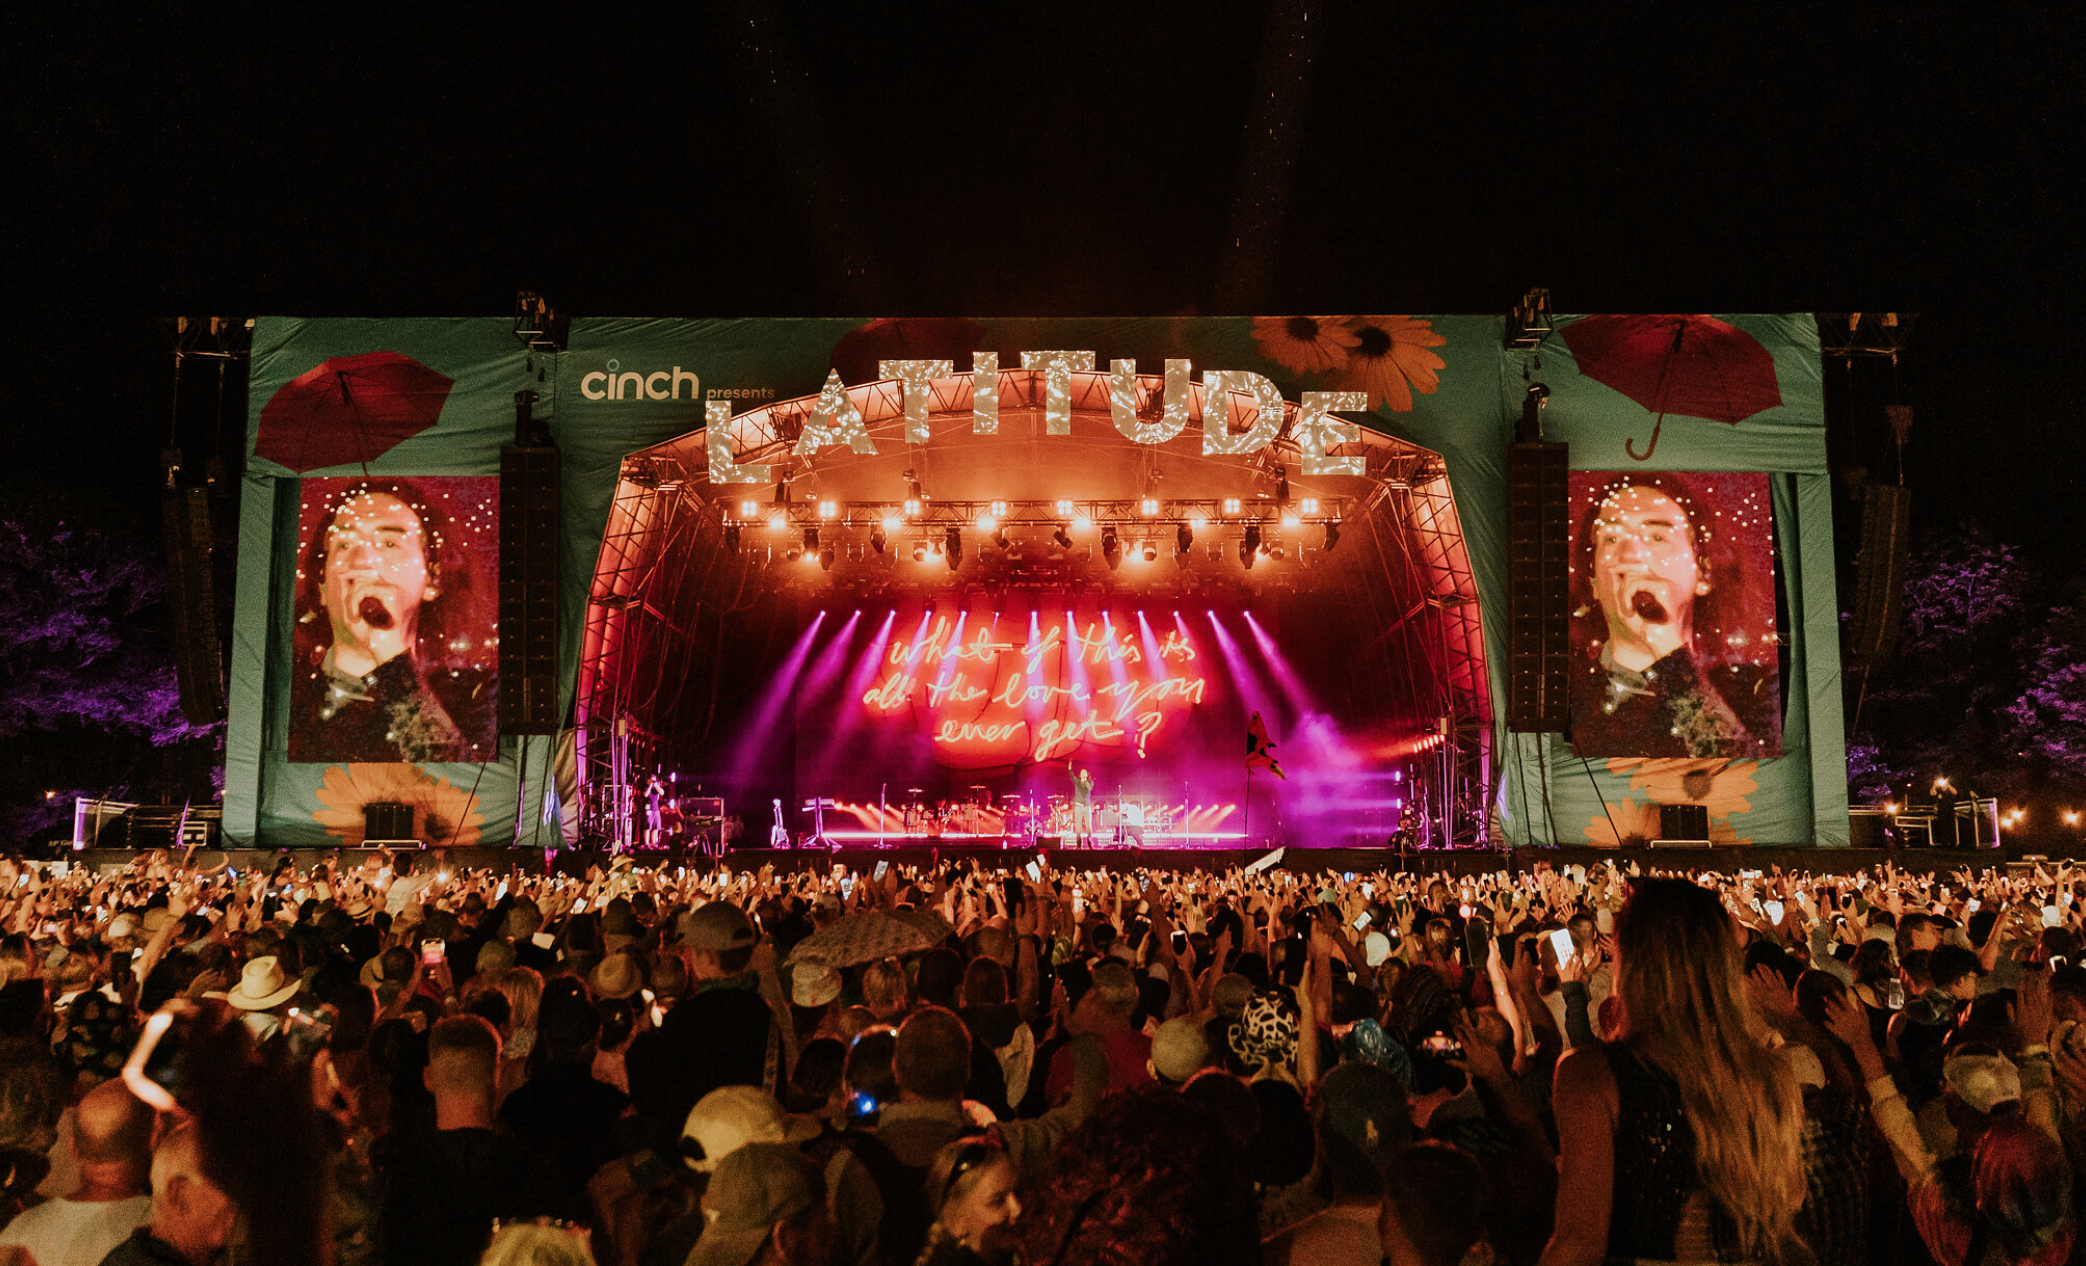 Headliners at this year's Latitude Festival will include Duran Duran, Keane, Kasabian, London Grammar